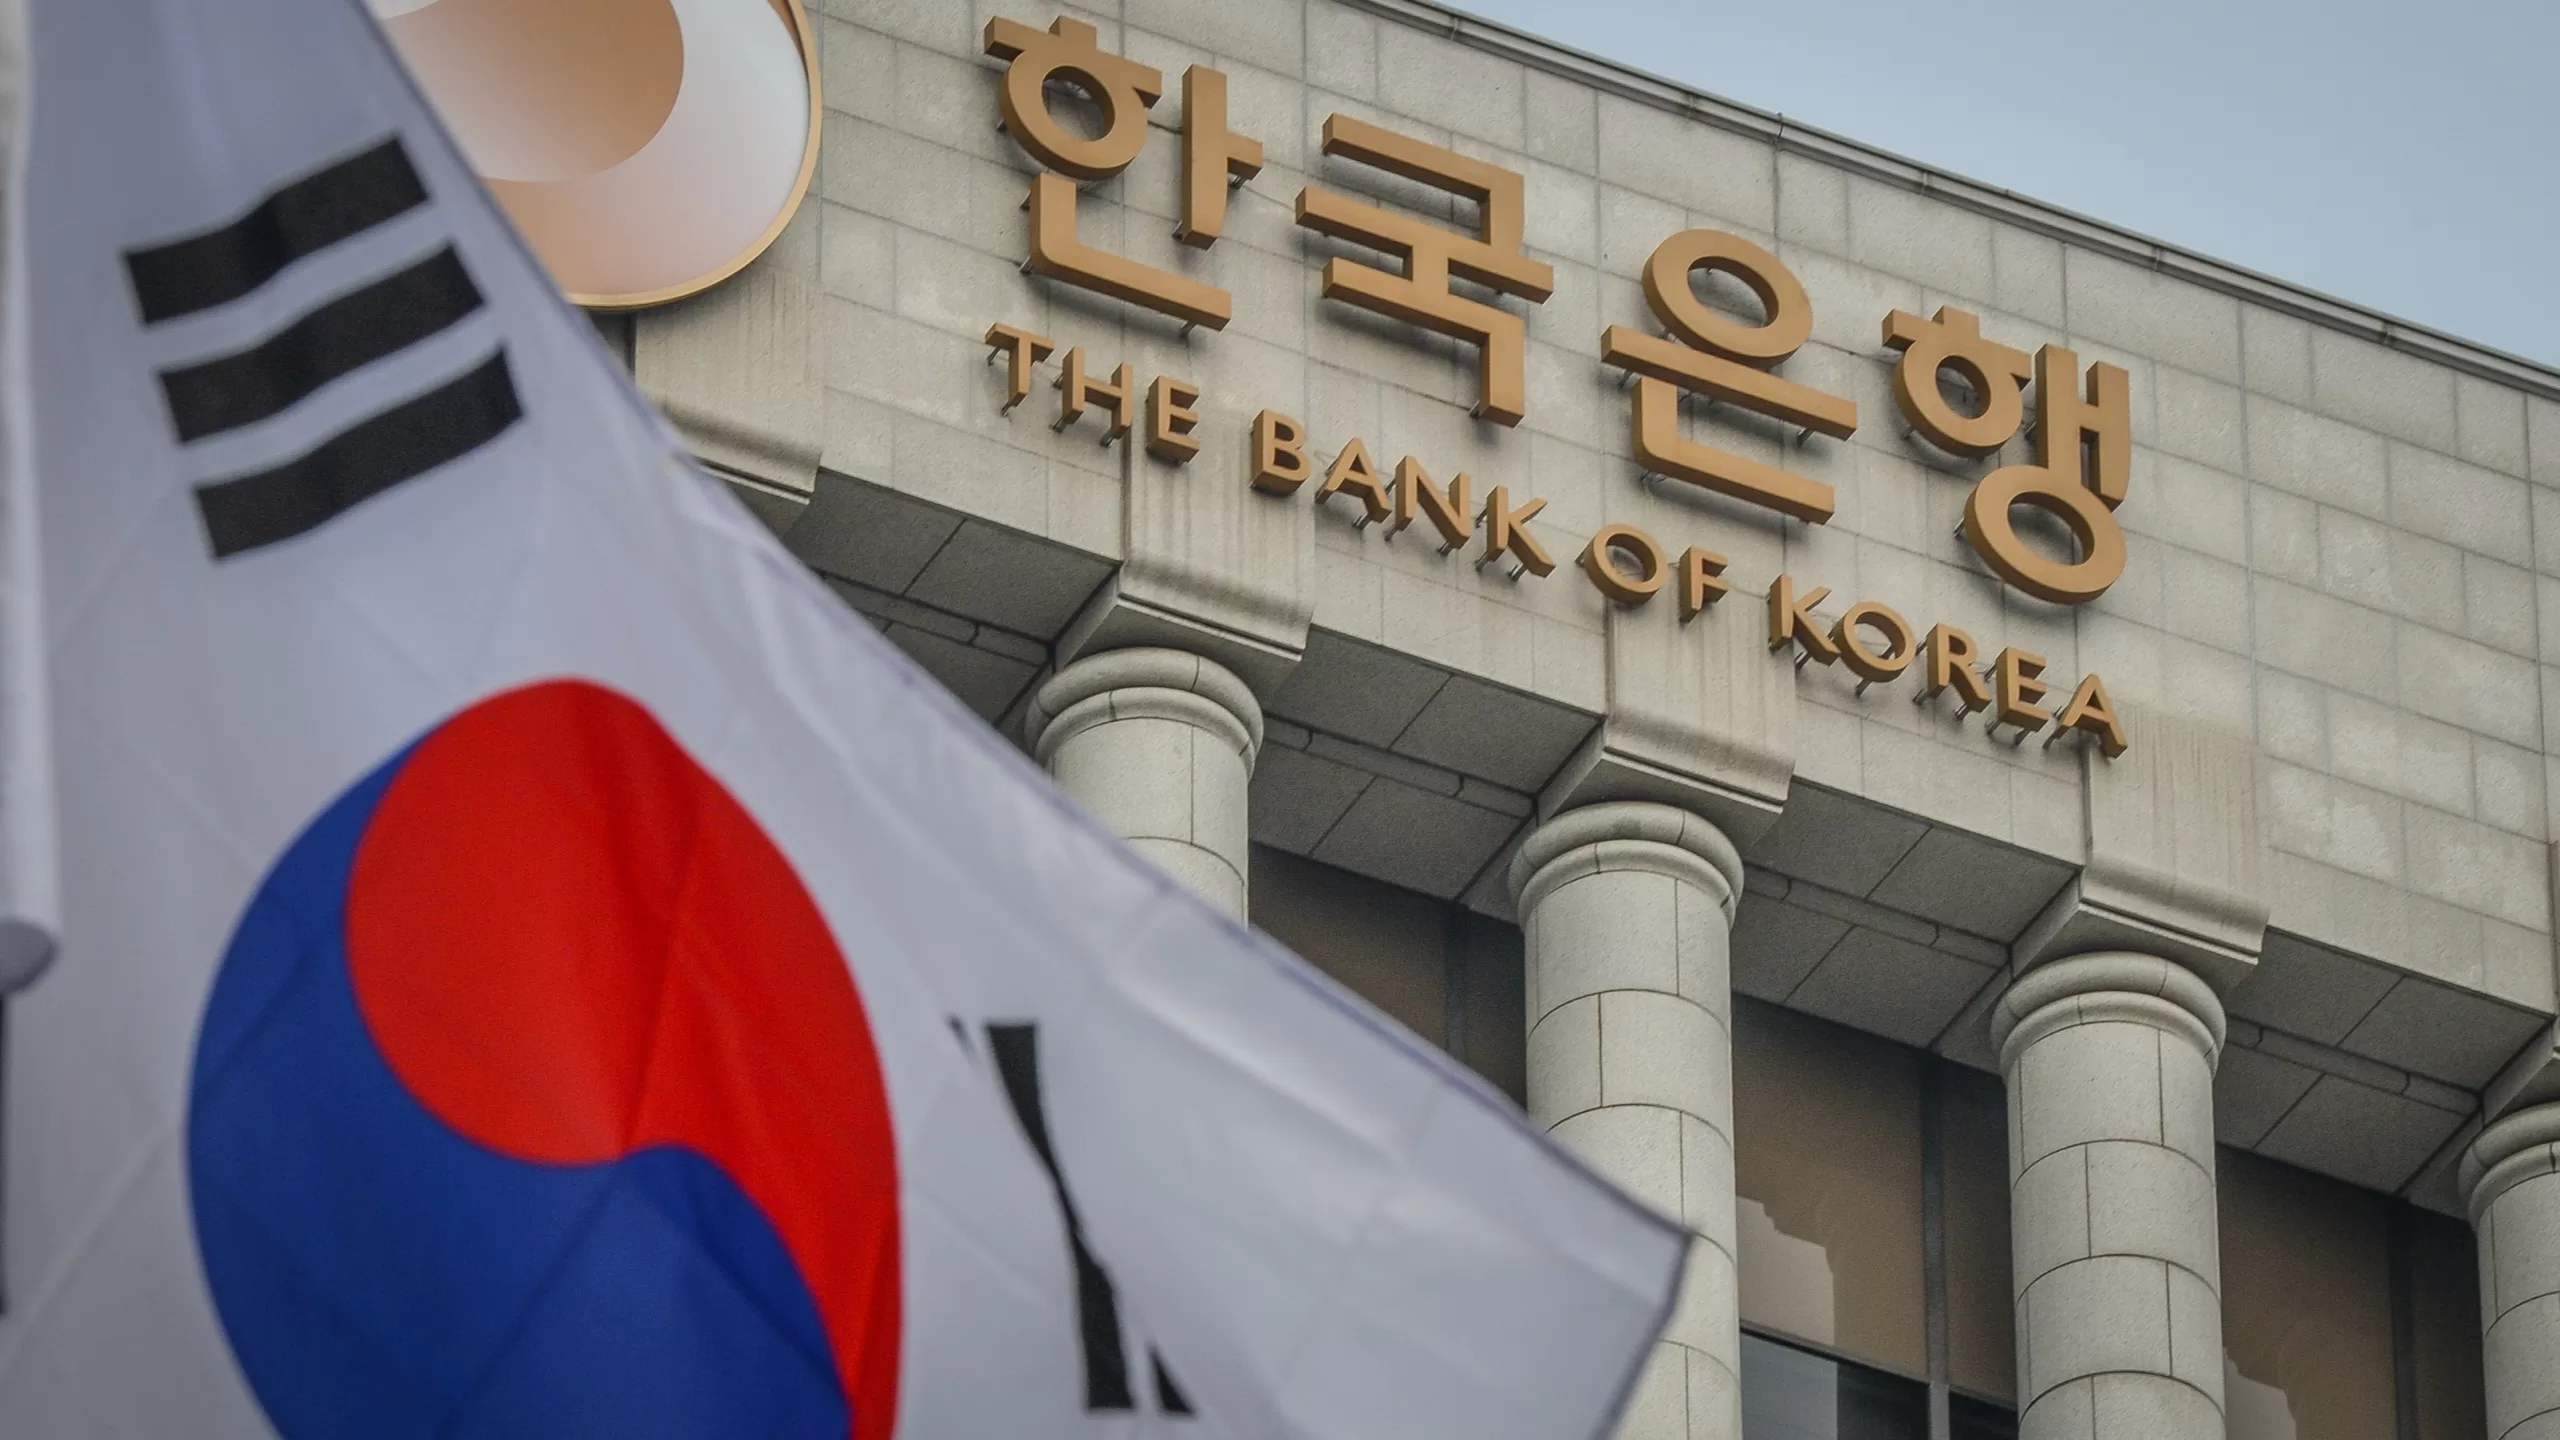 Bank of Korea Set to Test CBDC in Three Regions: A Milestone in Digital Currency Adoption